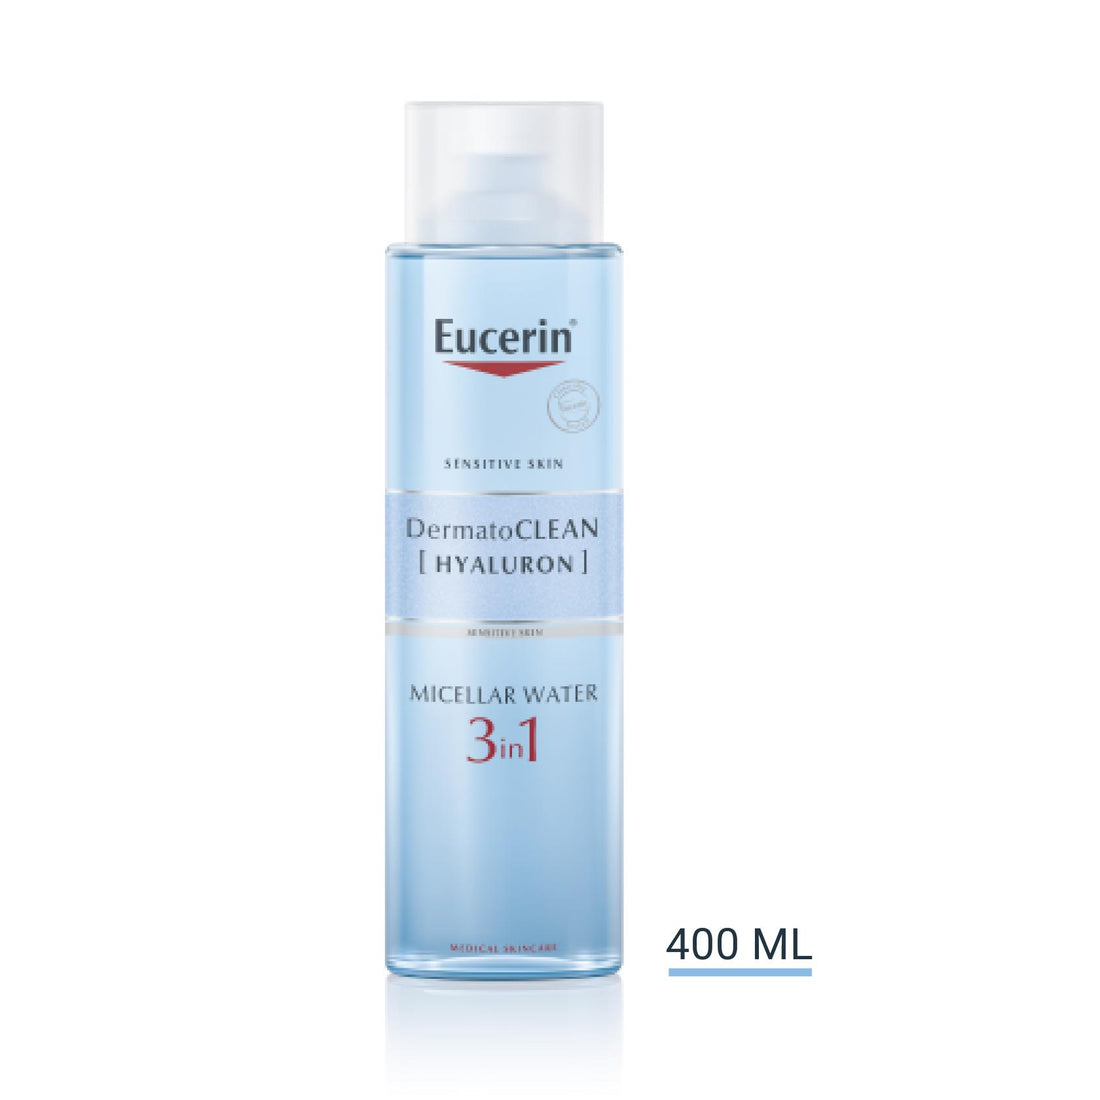 Eucerin DermatoClean Hyaluron Micellar Water 400ml